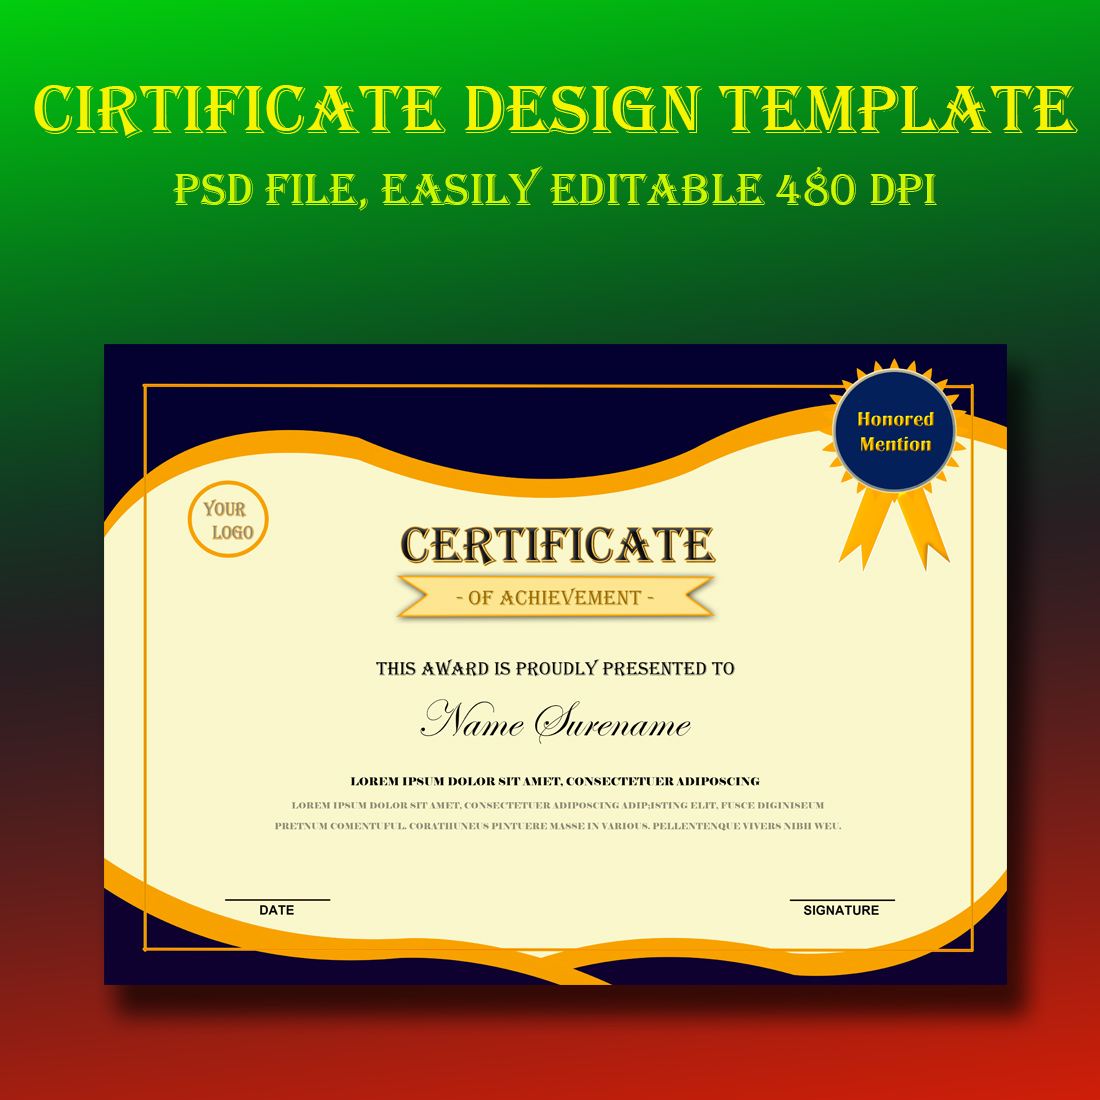 Elegant Certificate Template cover image.